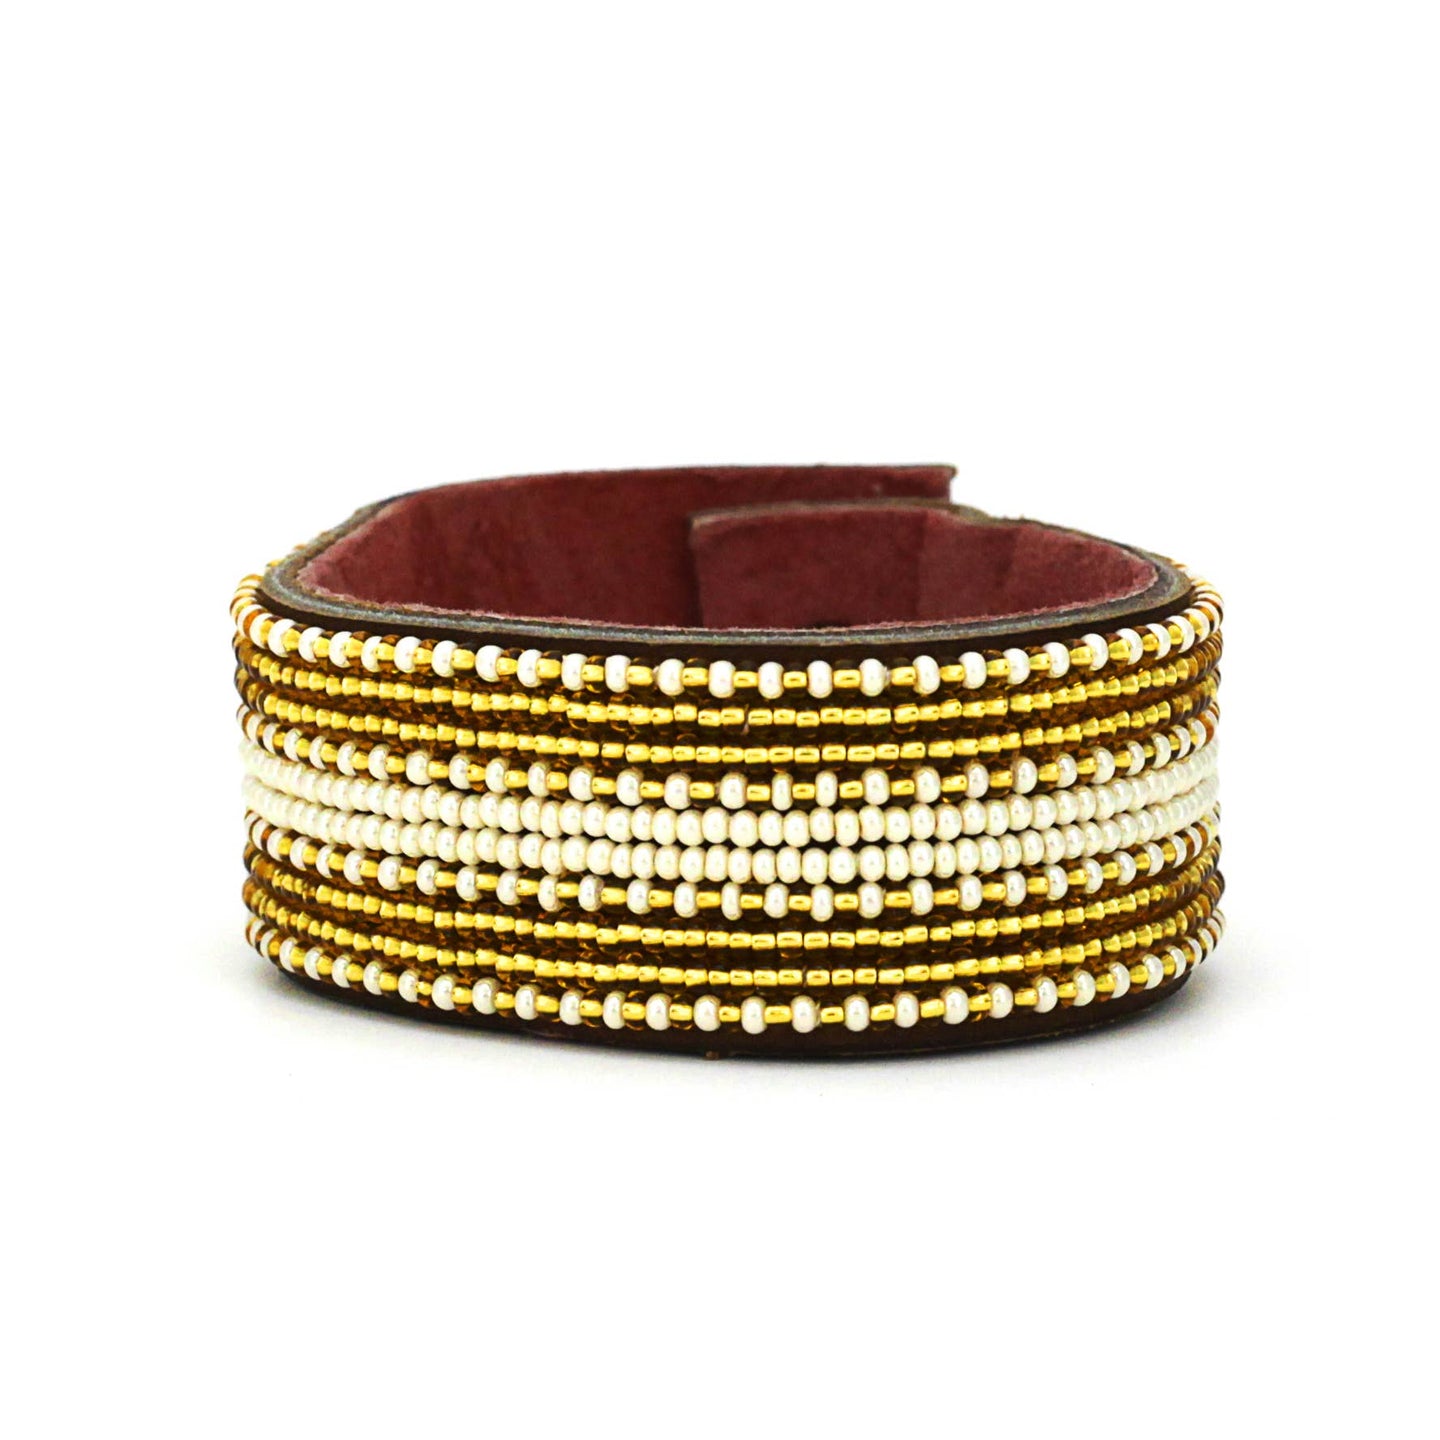 Swahili Coast - Medium Gold and Pearl Stripe leather Cuff